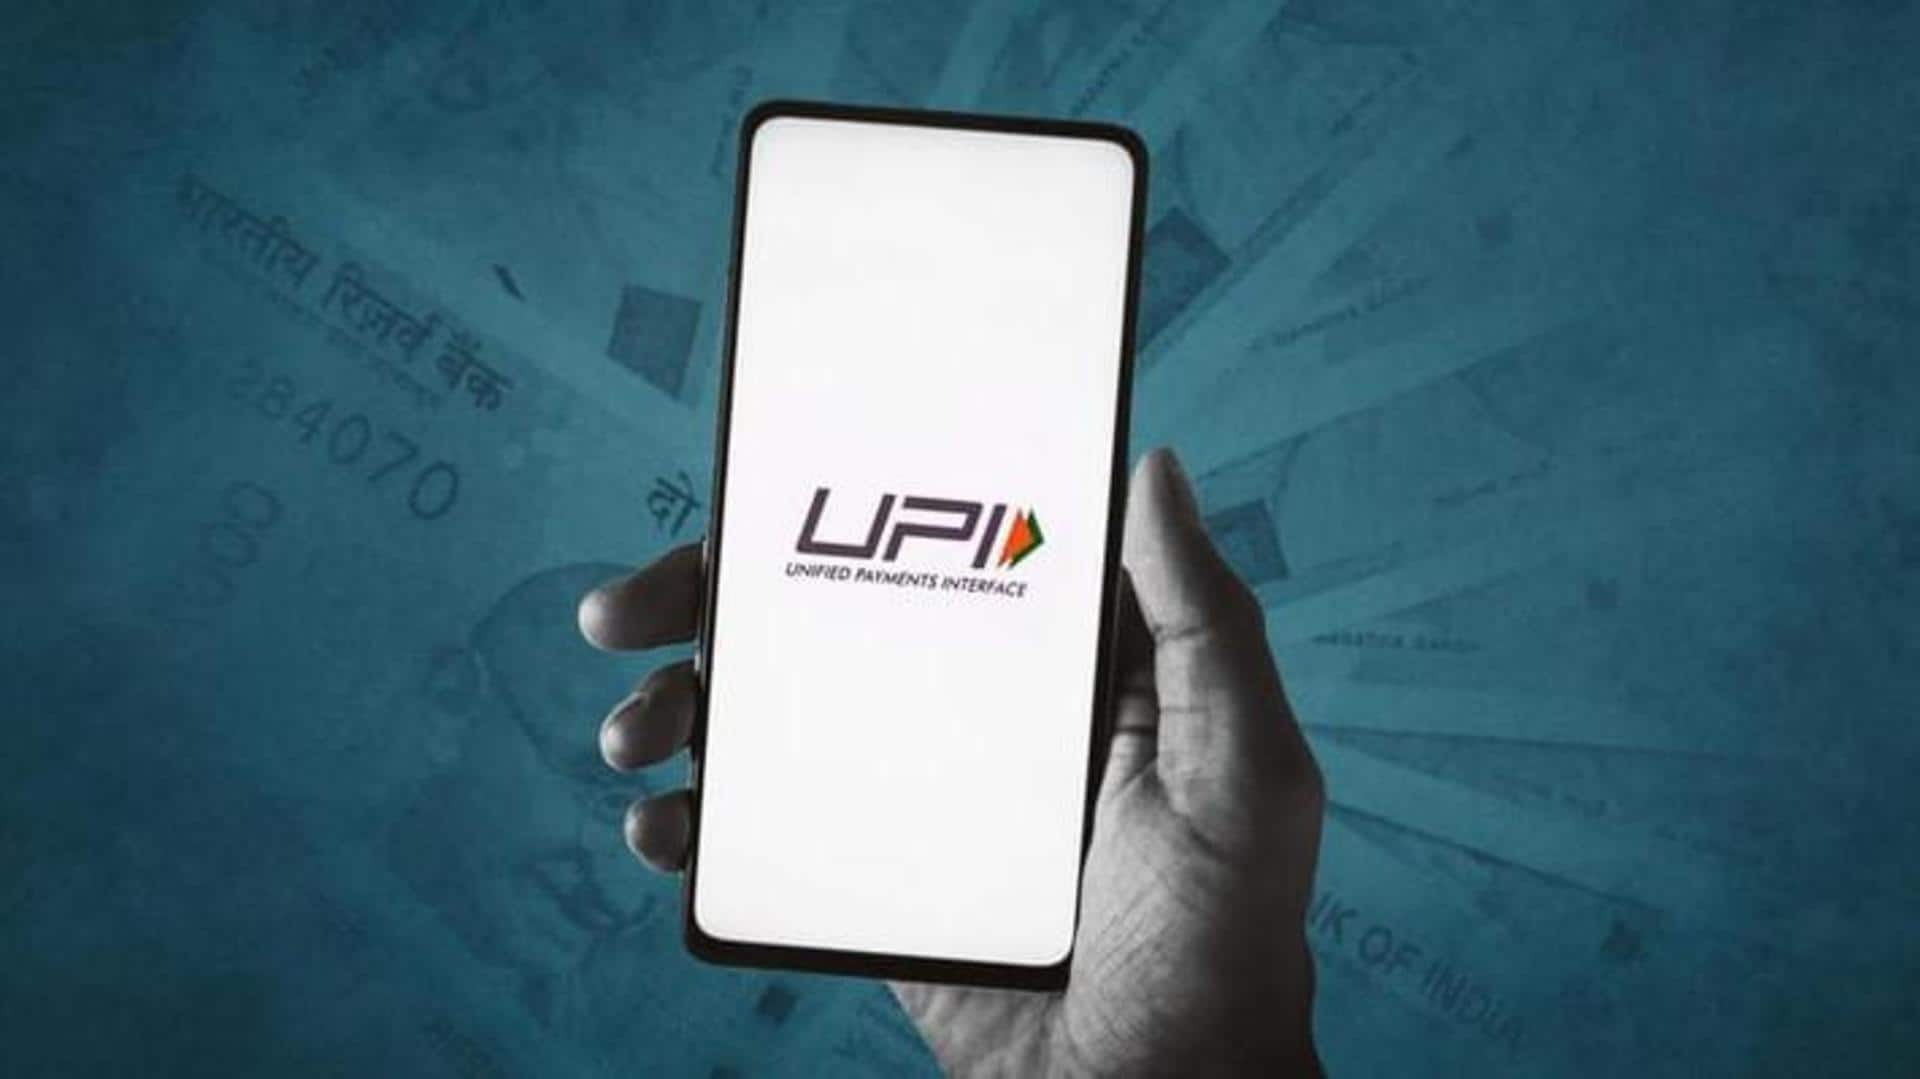 '1 billion daily transactions': Future of UPI in India